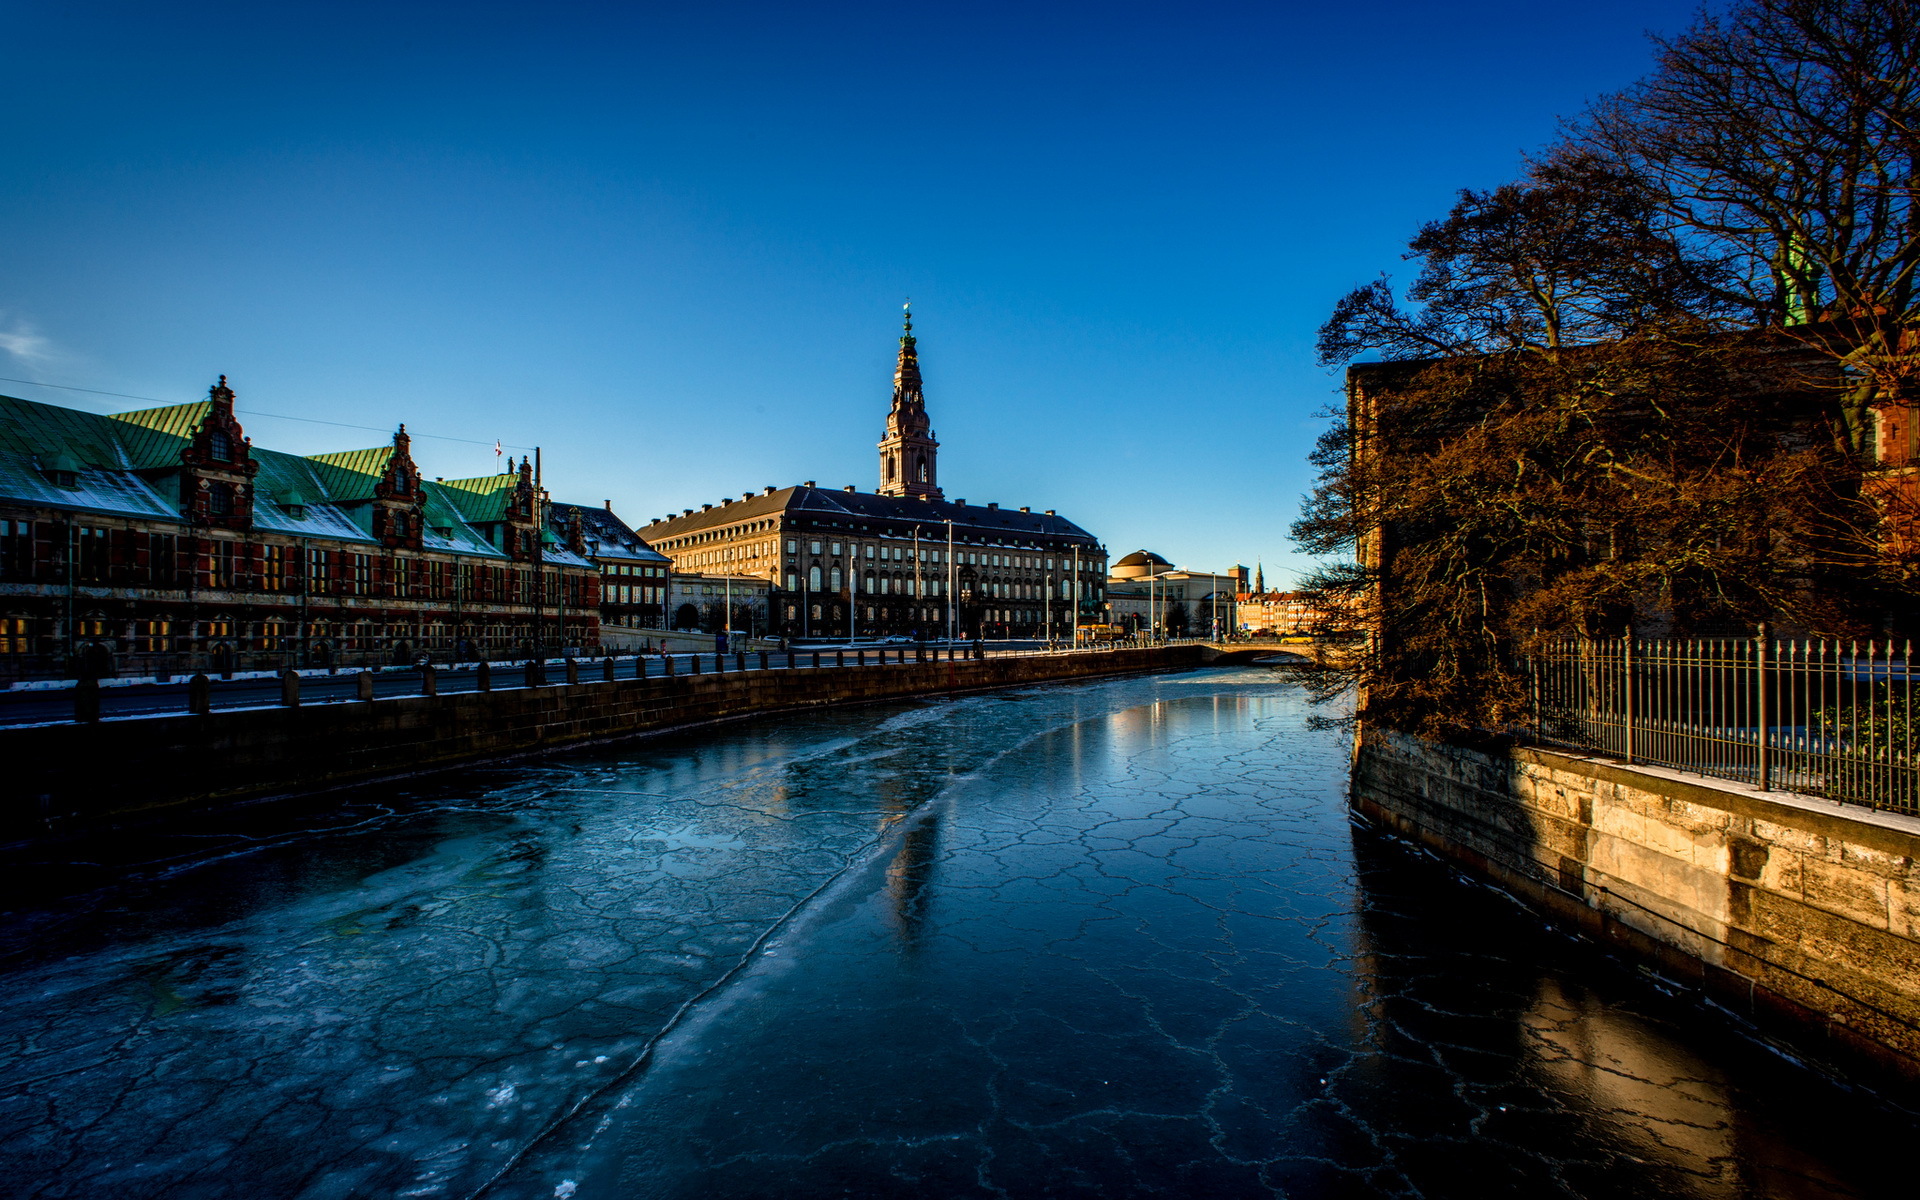 Popular Christiansborg Palace Image for Phone